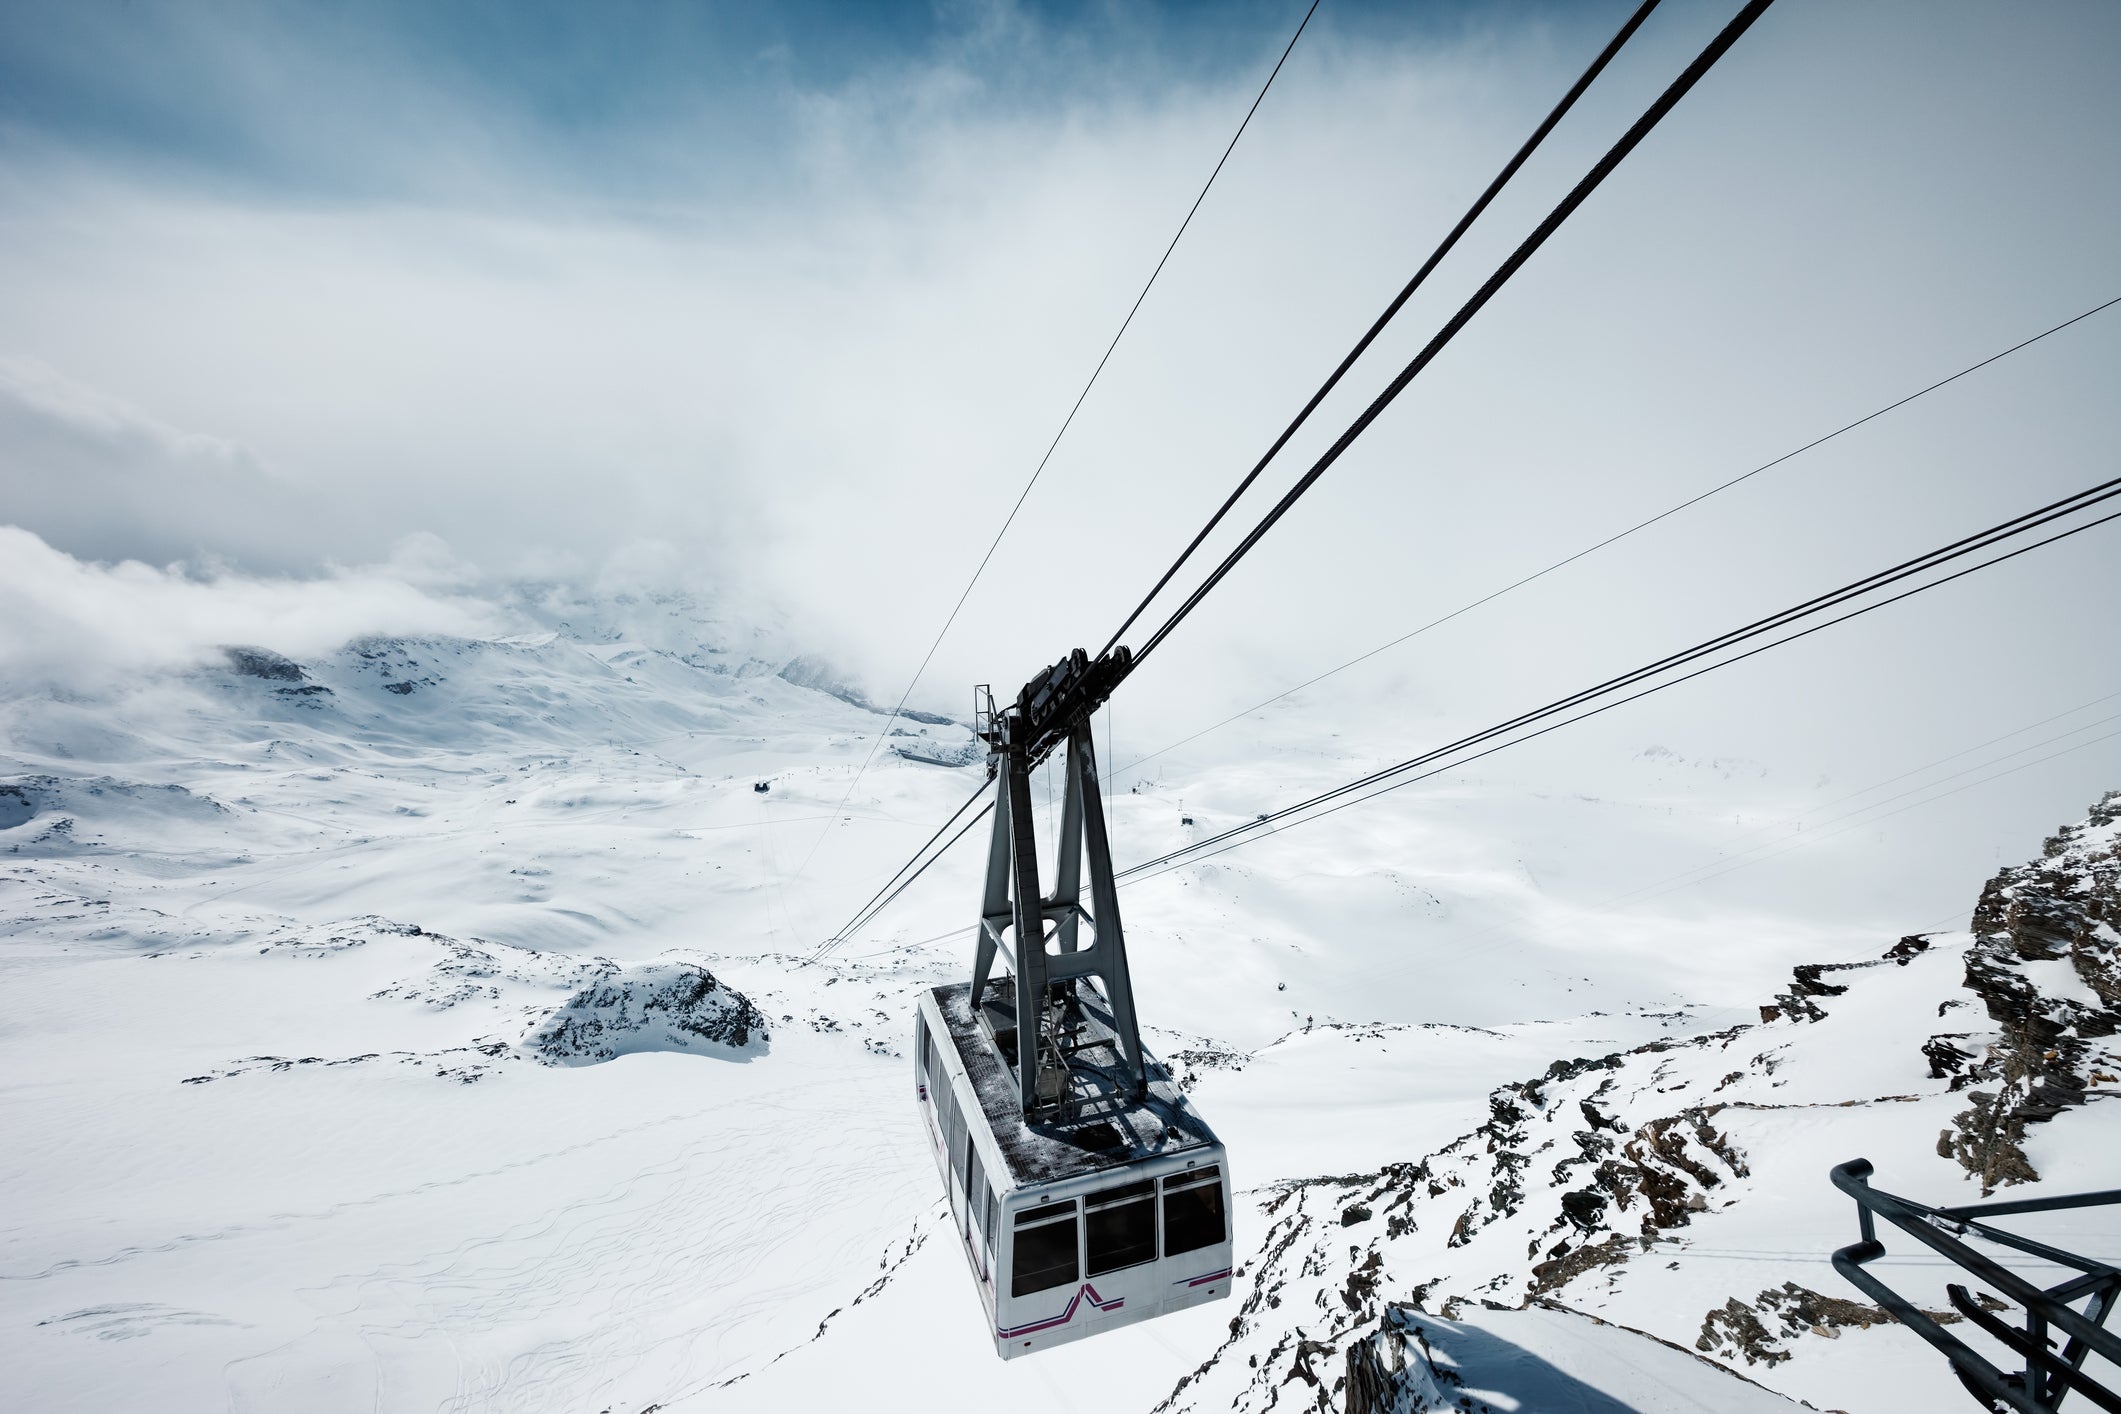 Zermatt in Switzerland is popular with skiers, but heavy snowfall has left many stranded